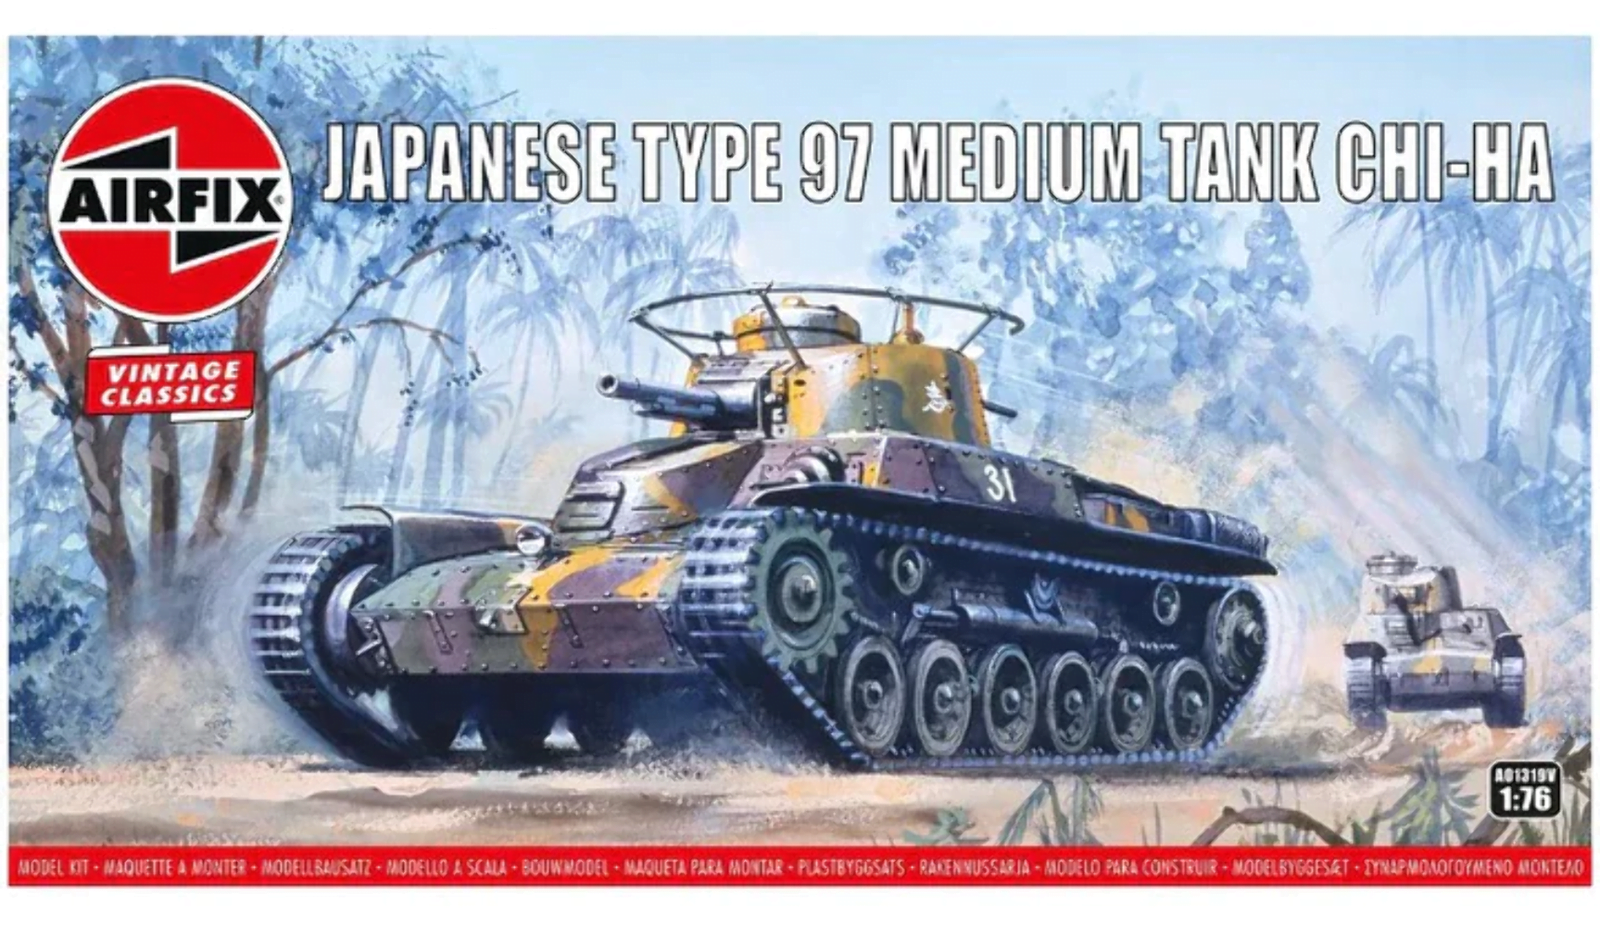 Japanese type 97 medium tank chi-ha 1/76 airfix ao1319v